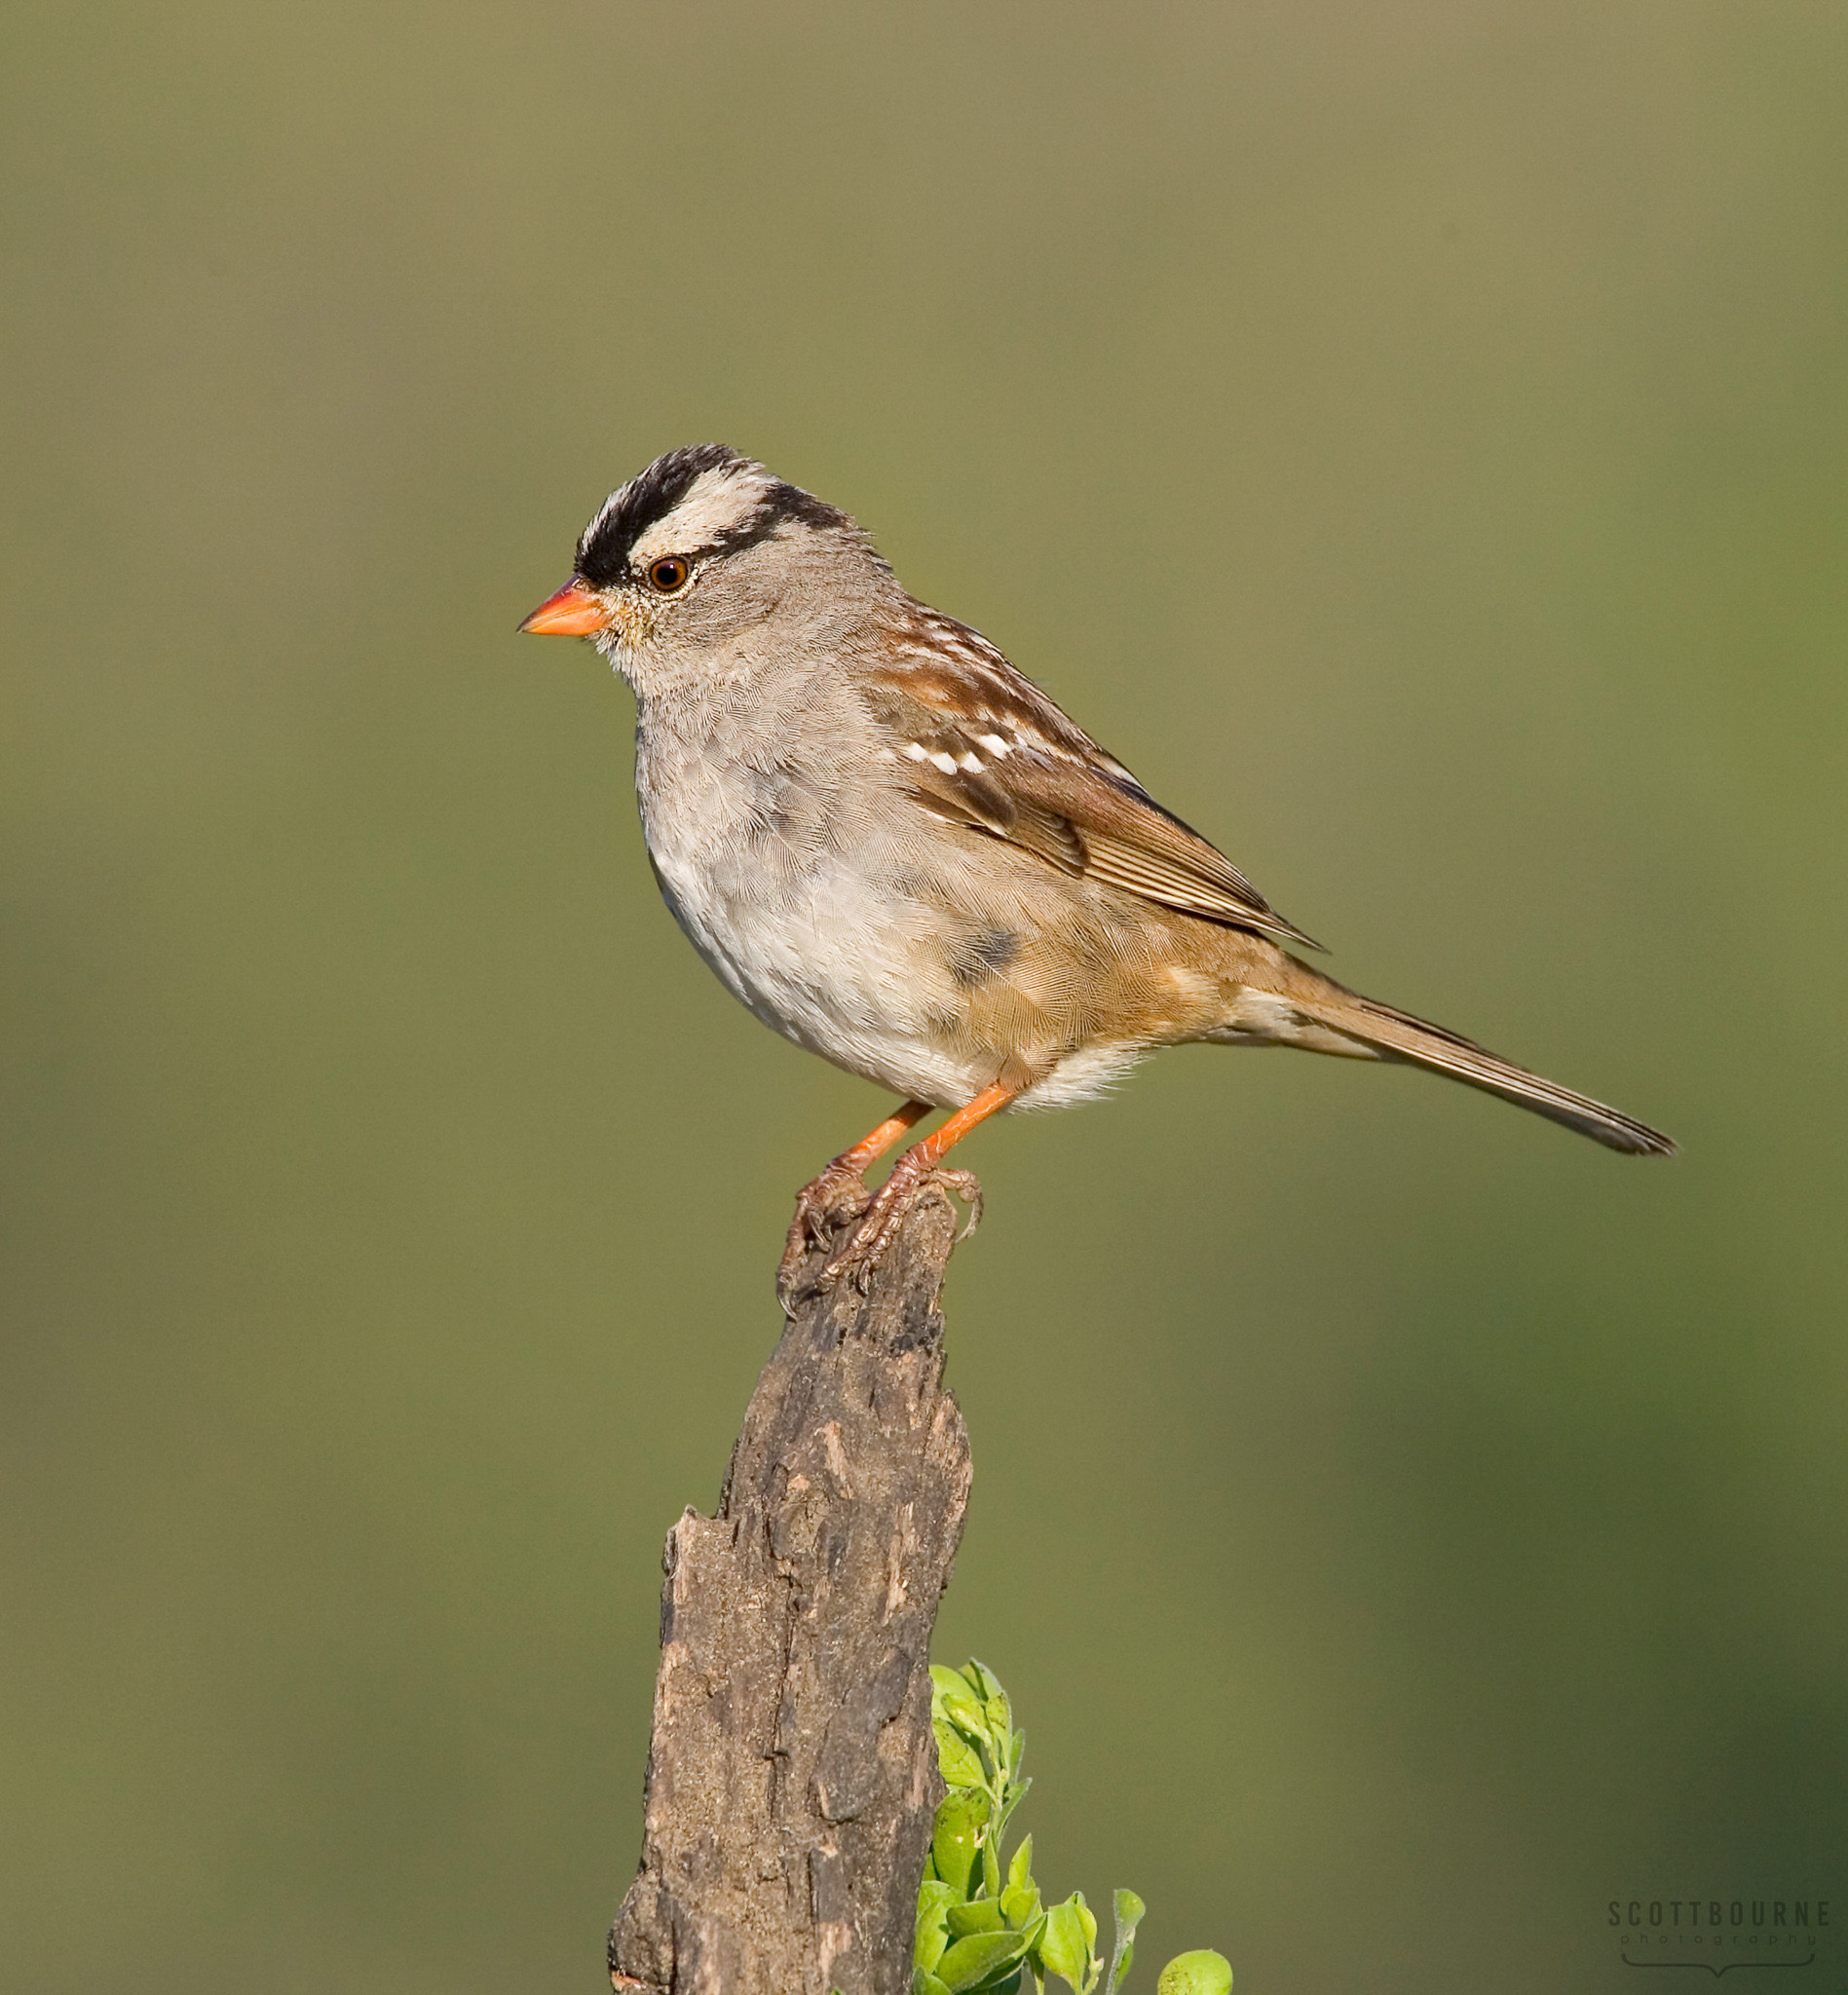 Sparrow photograph by Scott Bourne